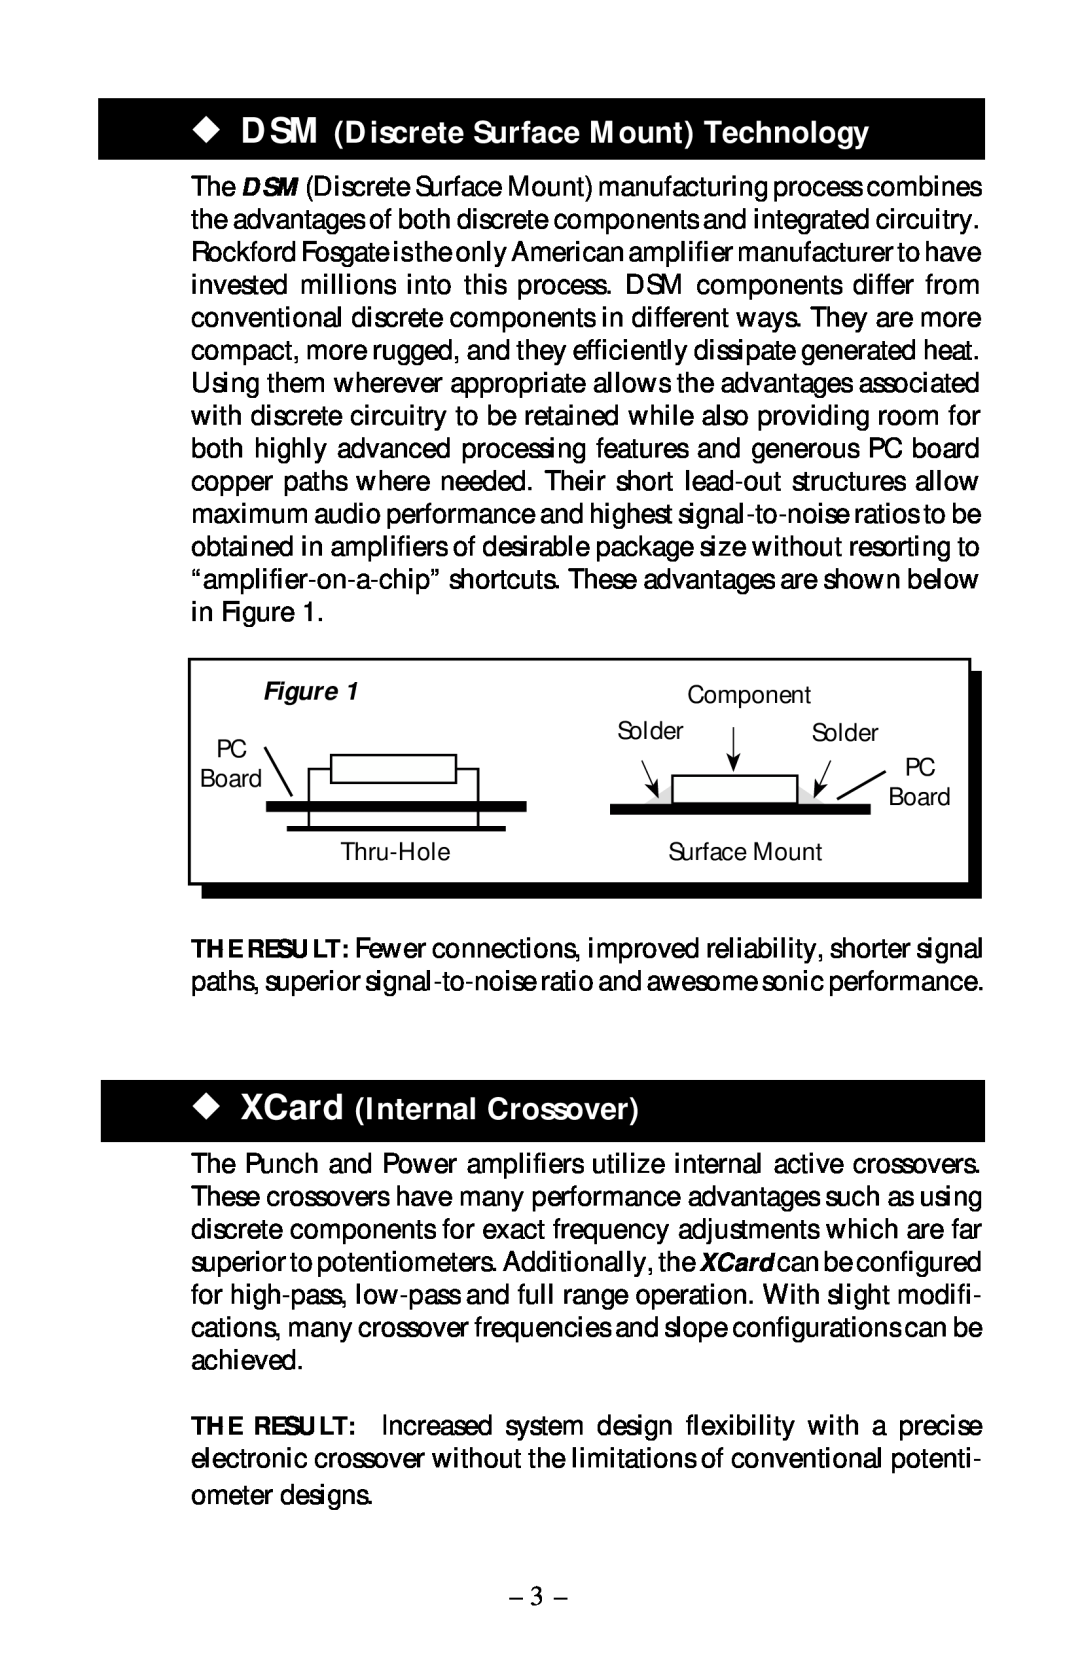 Rockford Fosgate 40X2 manual DSM Discrete Surface Mount Technology, XCard Internal Crossover 